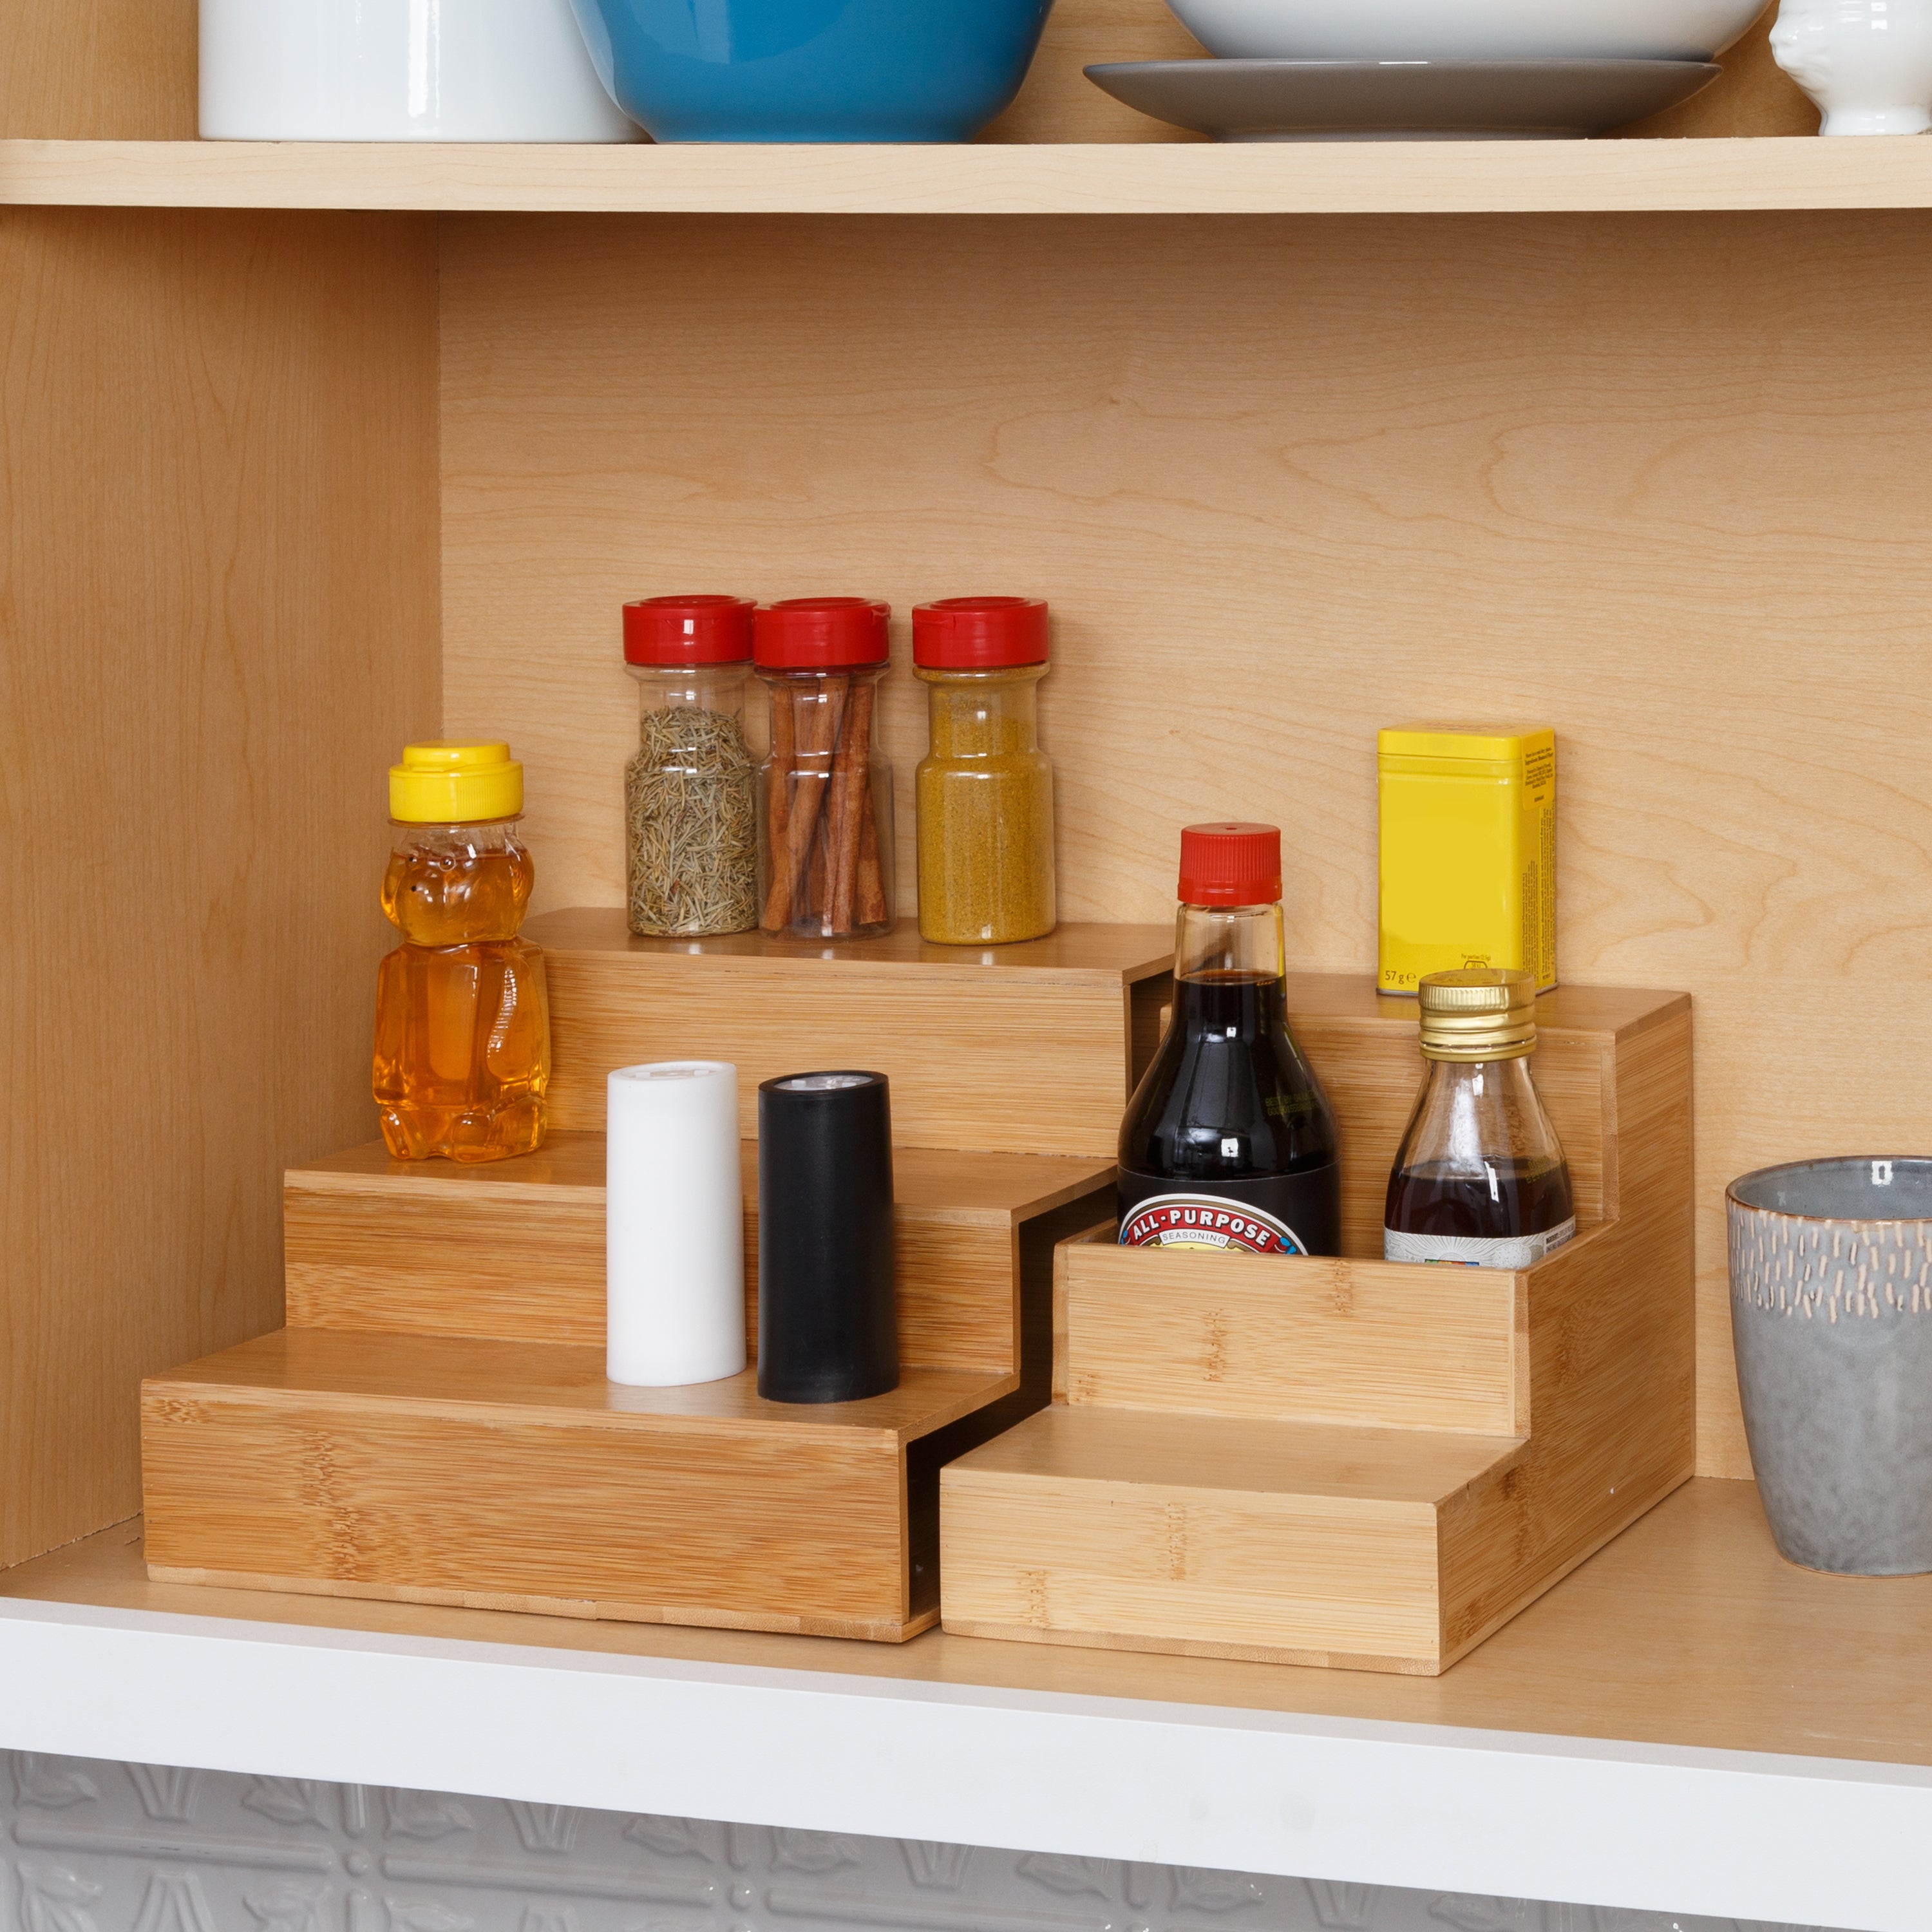 Honey-Can-Do Adjustable Cabinet Organizer